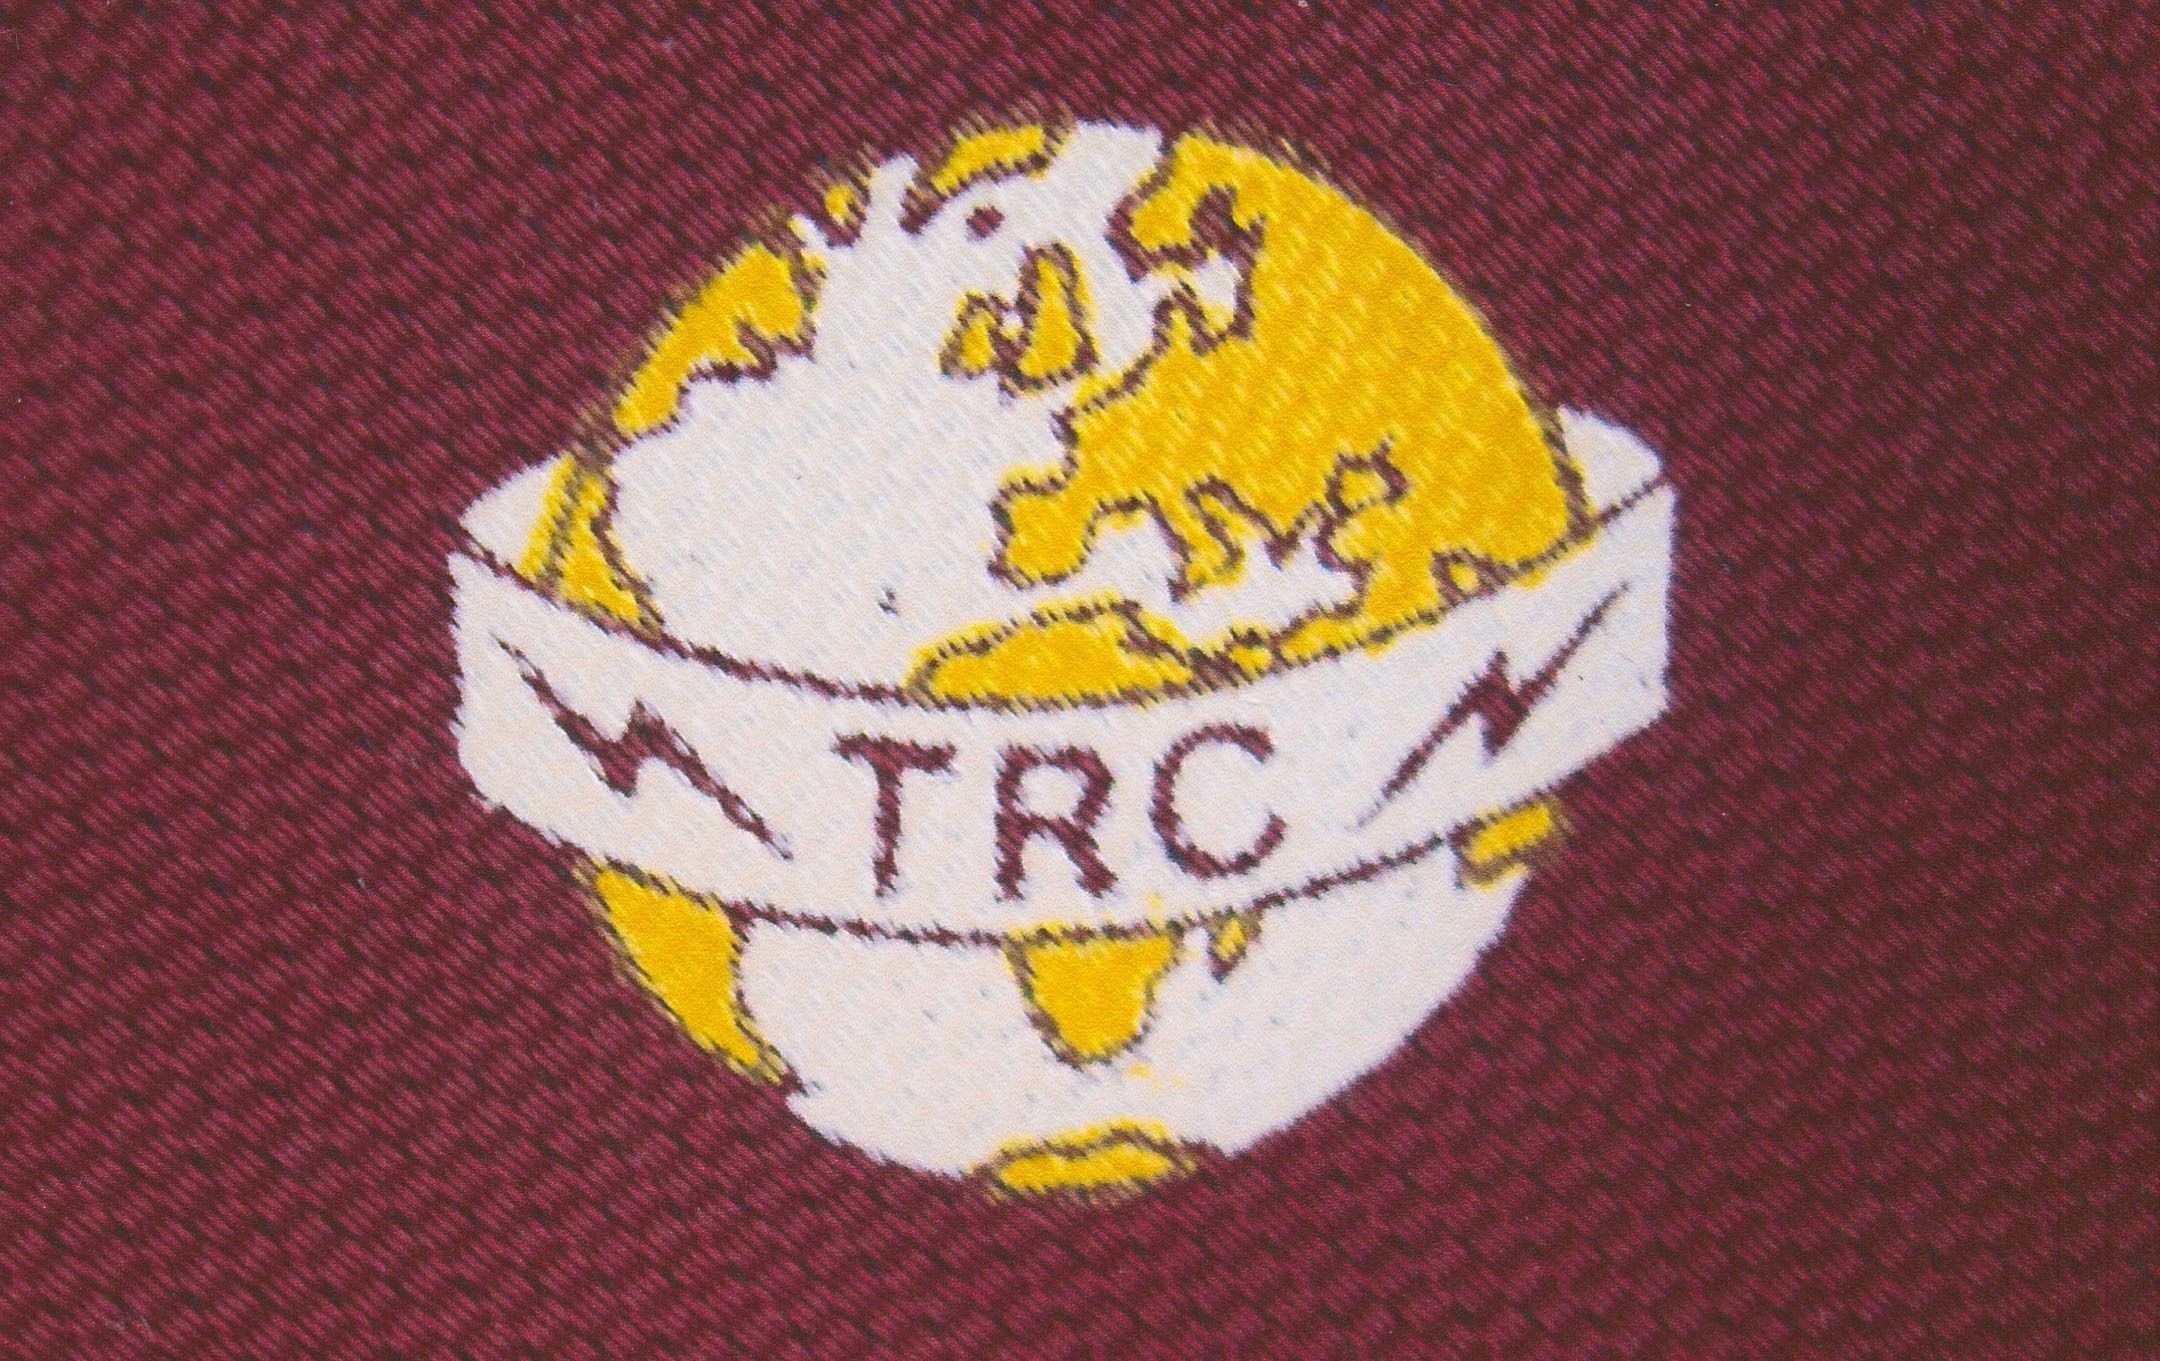 TRC tie logo